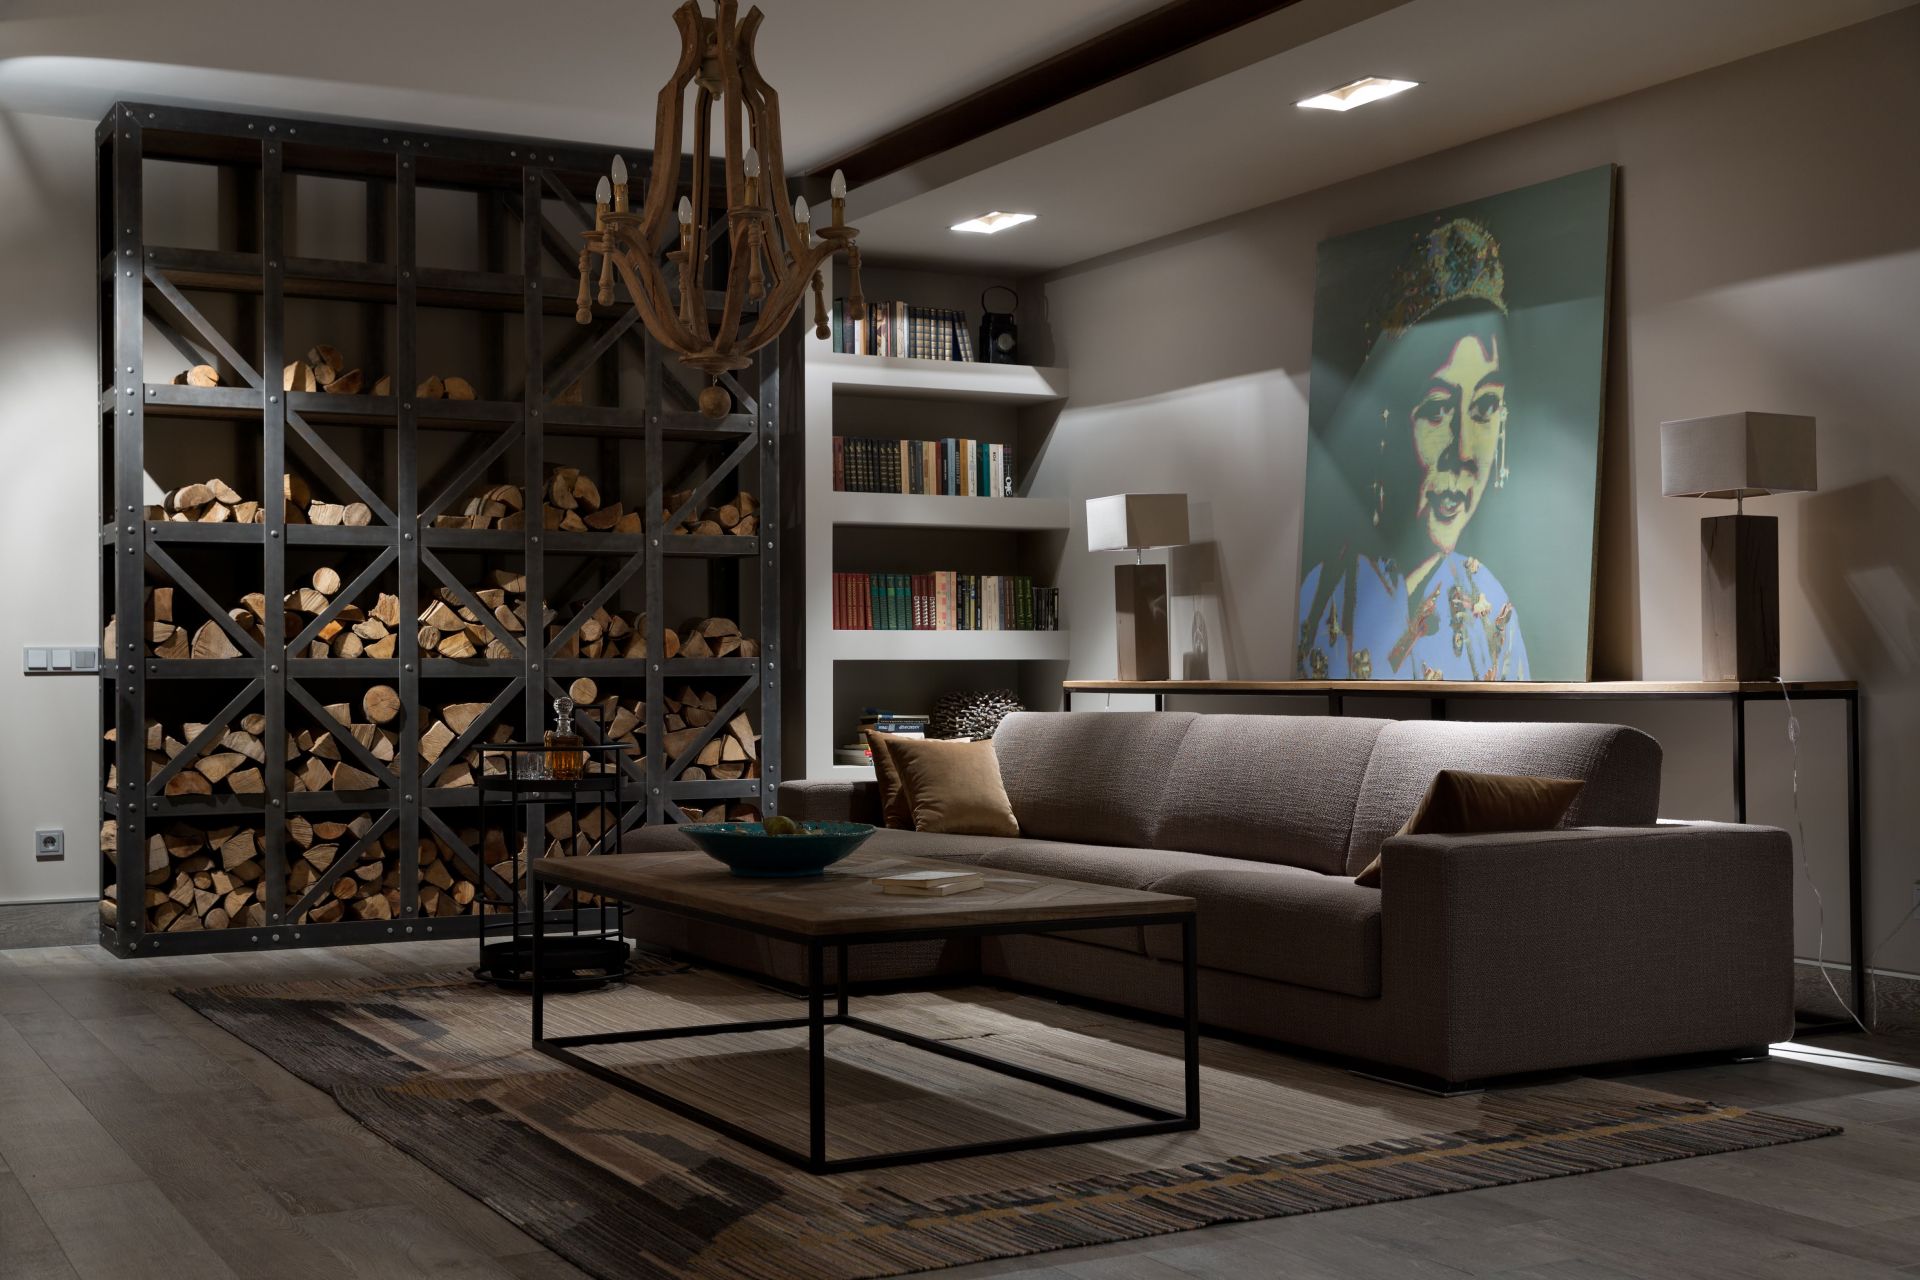 Ethnic style living room design